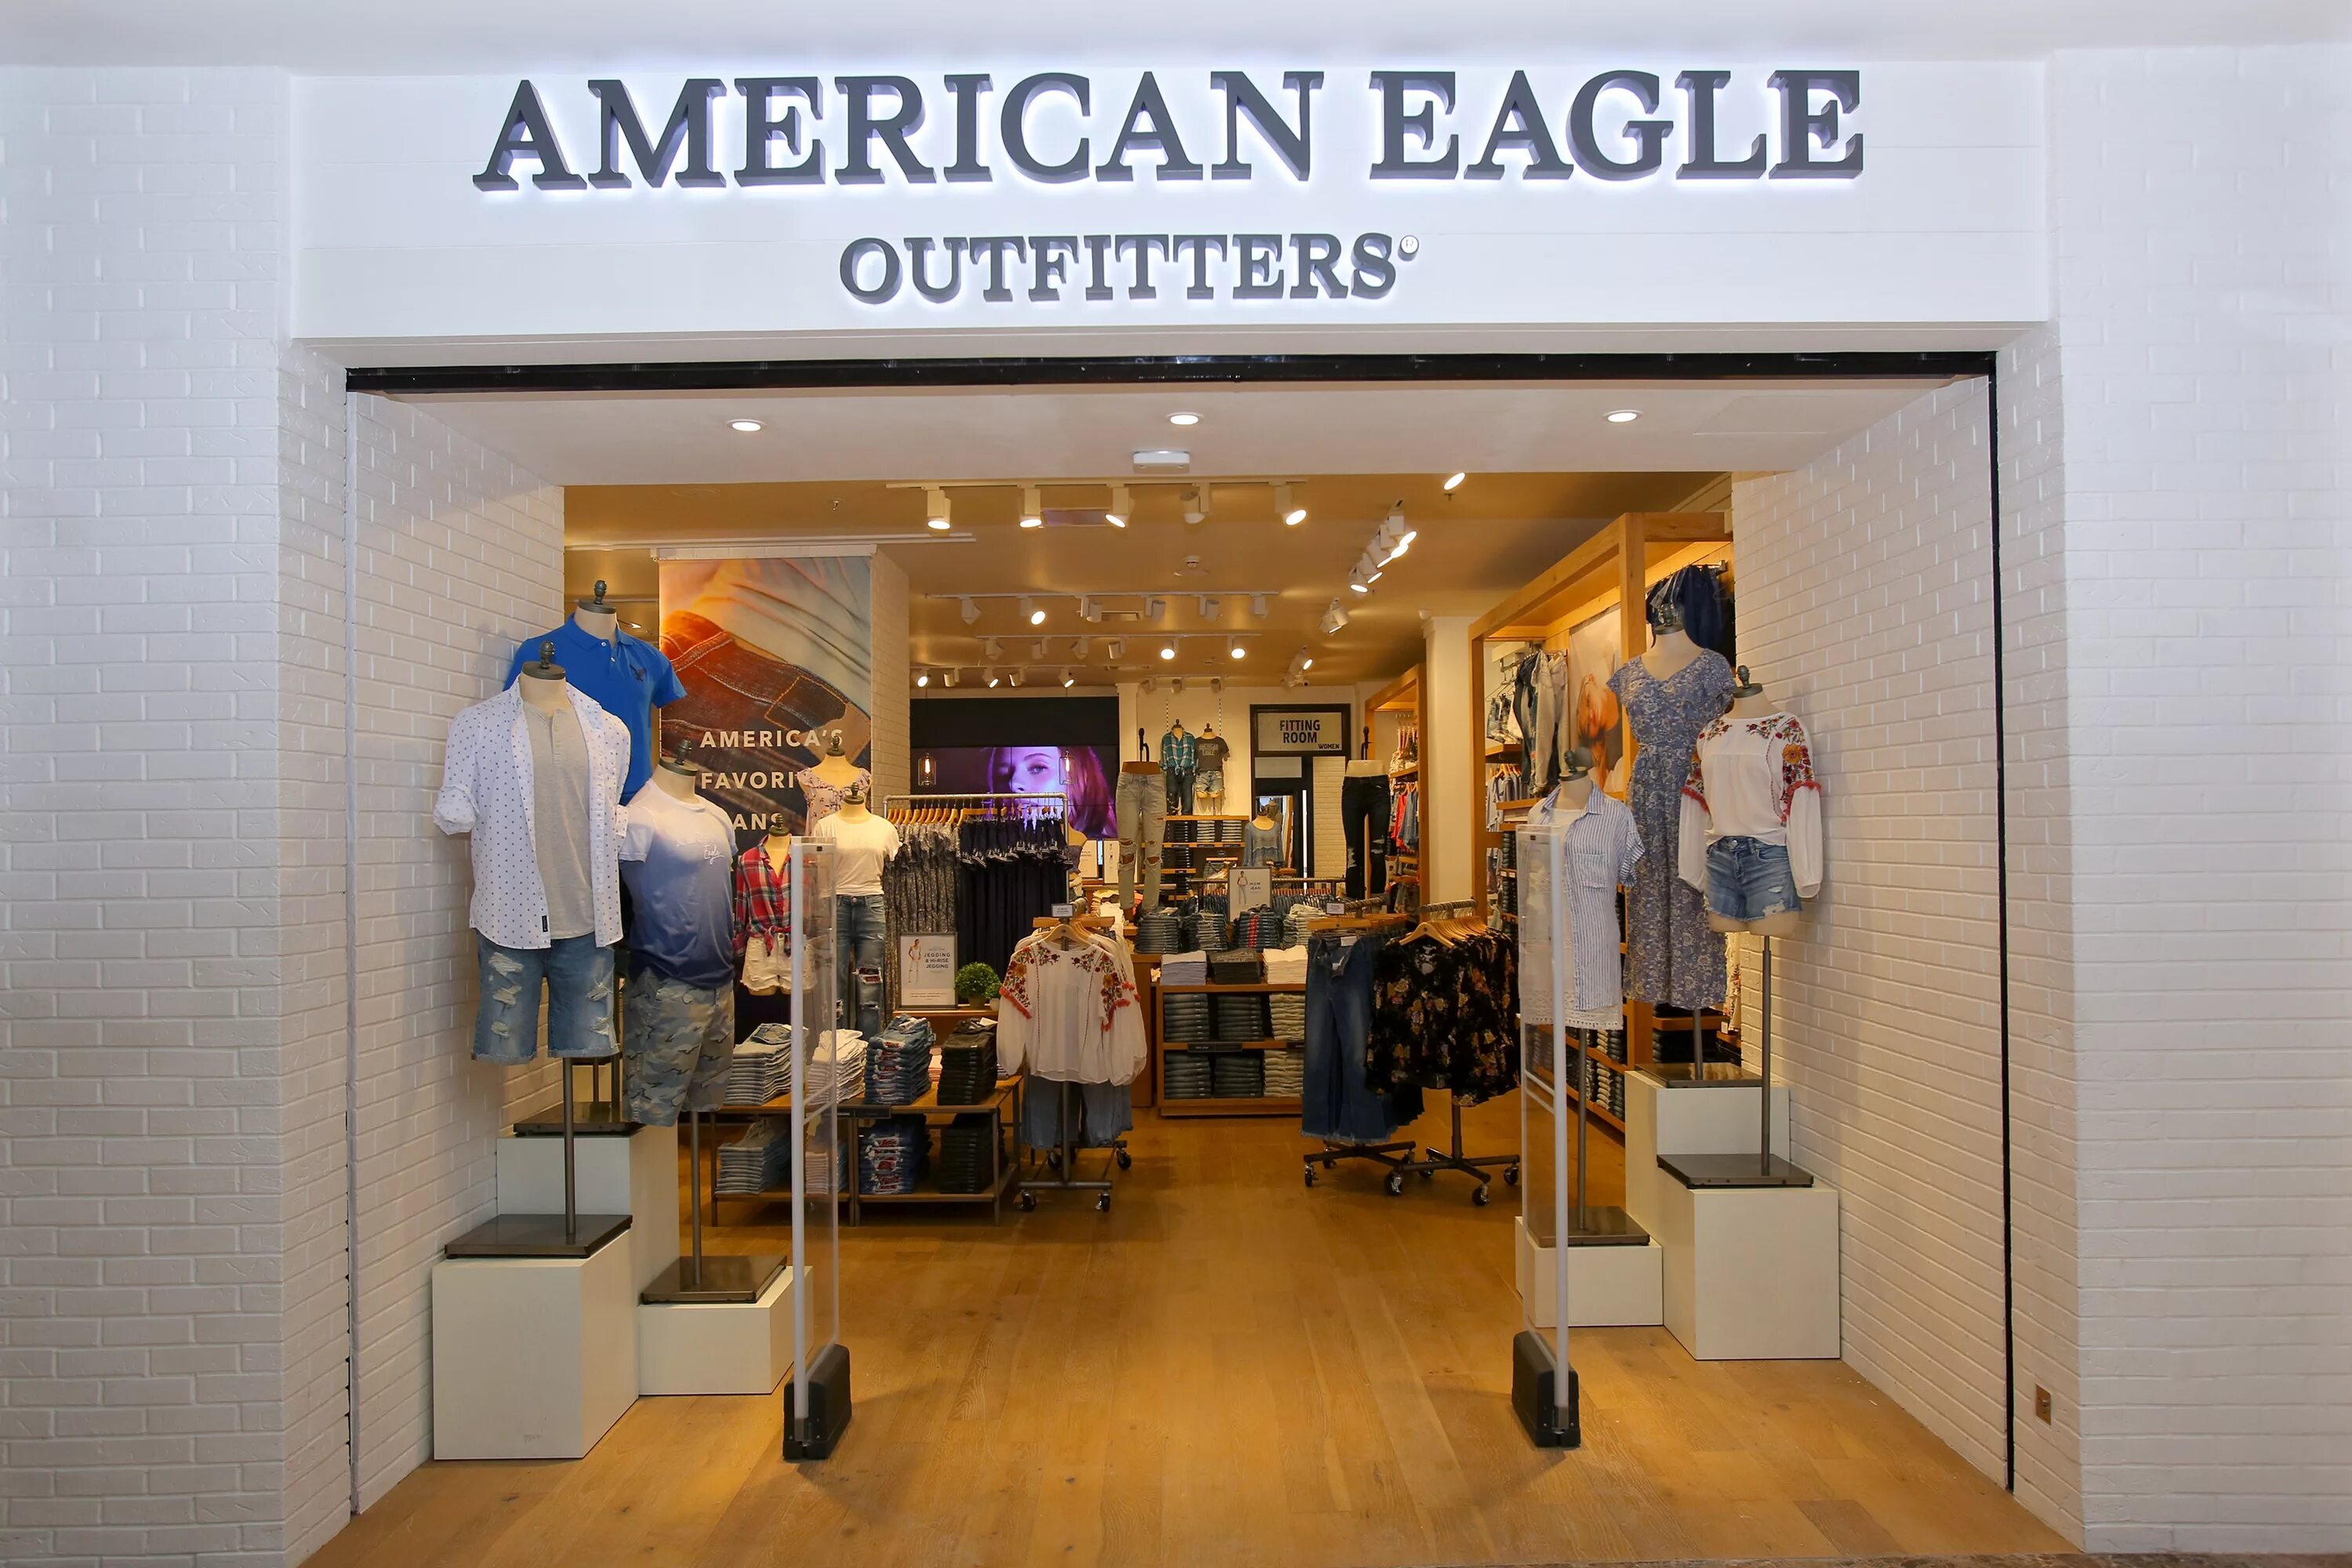 Американ игл. American Eagle Outfitters. American Eagle одежда. Американ игл бренд. American Eagle платье.